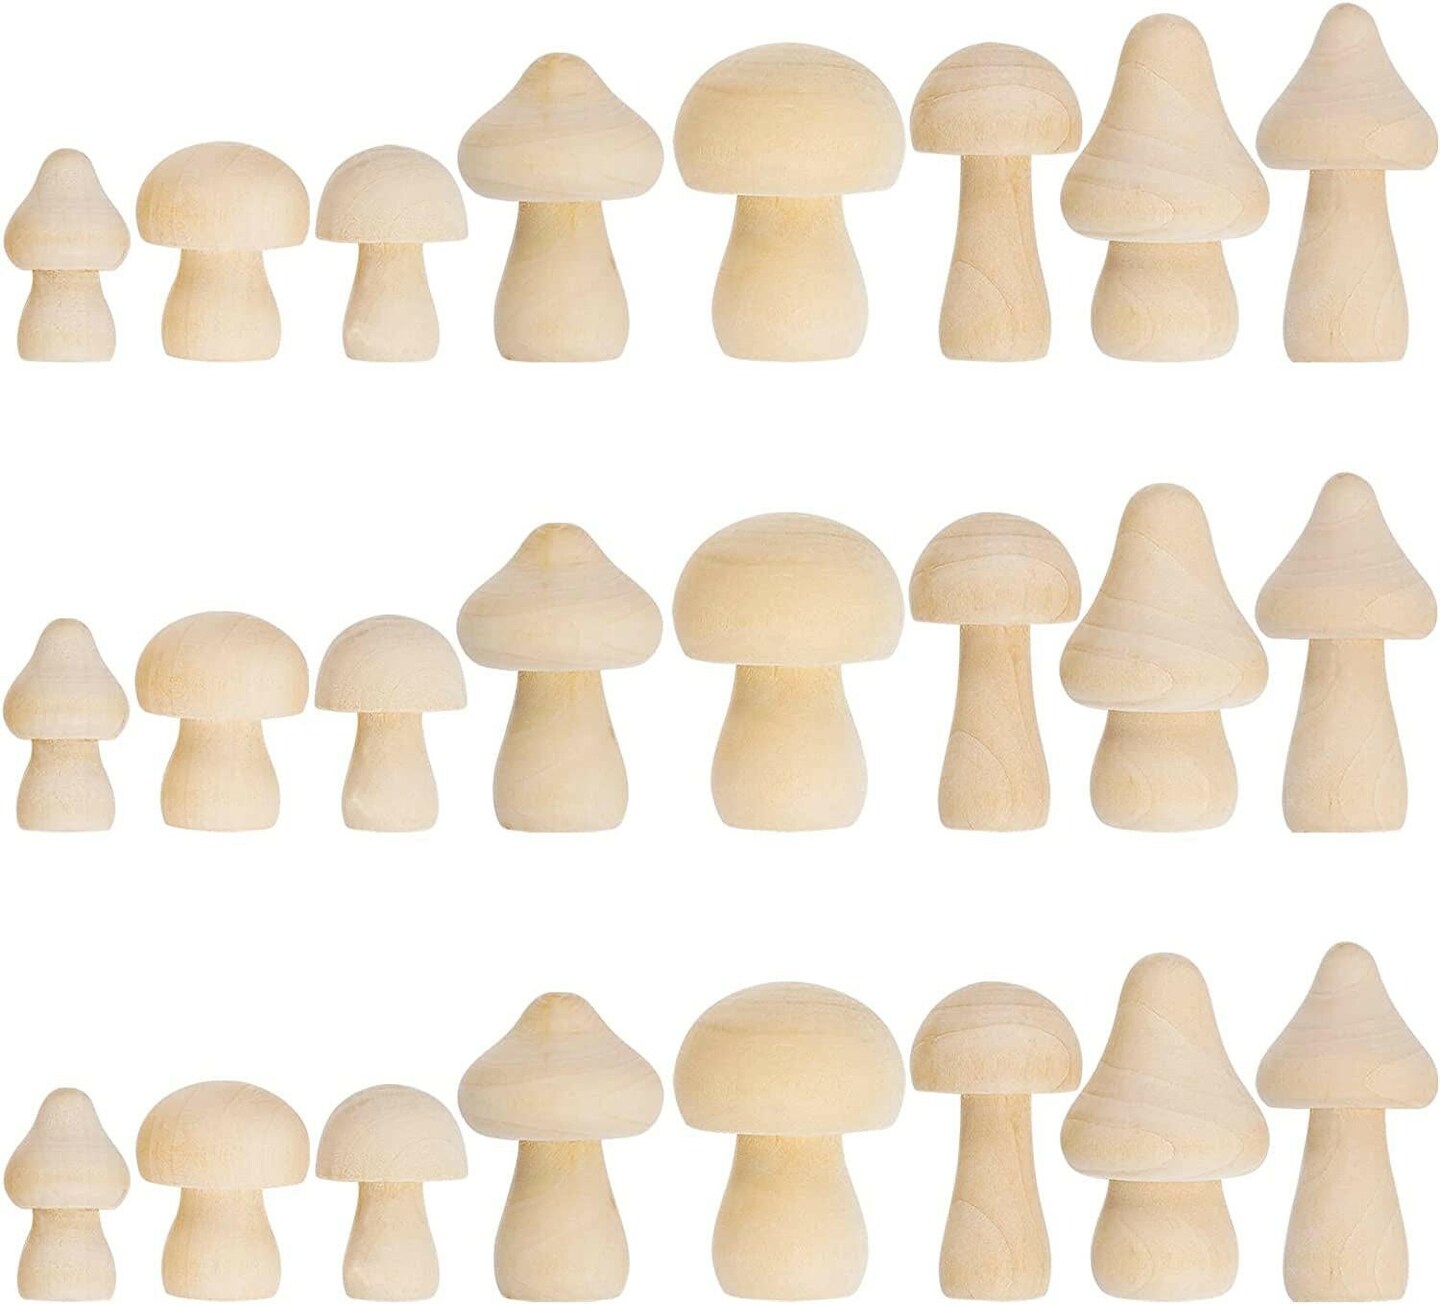 24 Pieces Unfinished Wooden Mushroom Mini Wood Mushrooms Natural